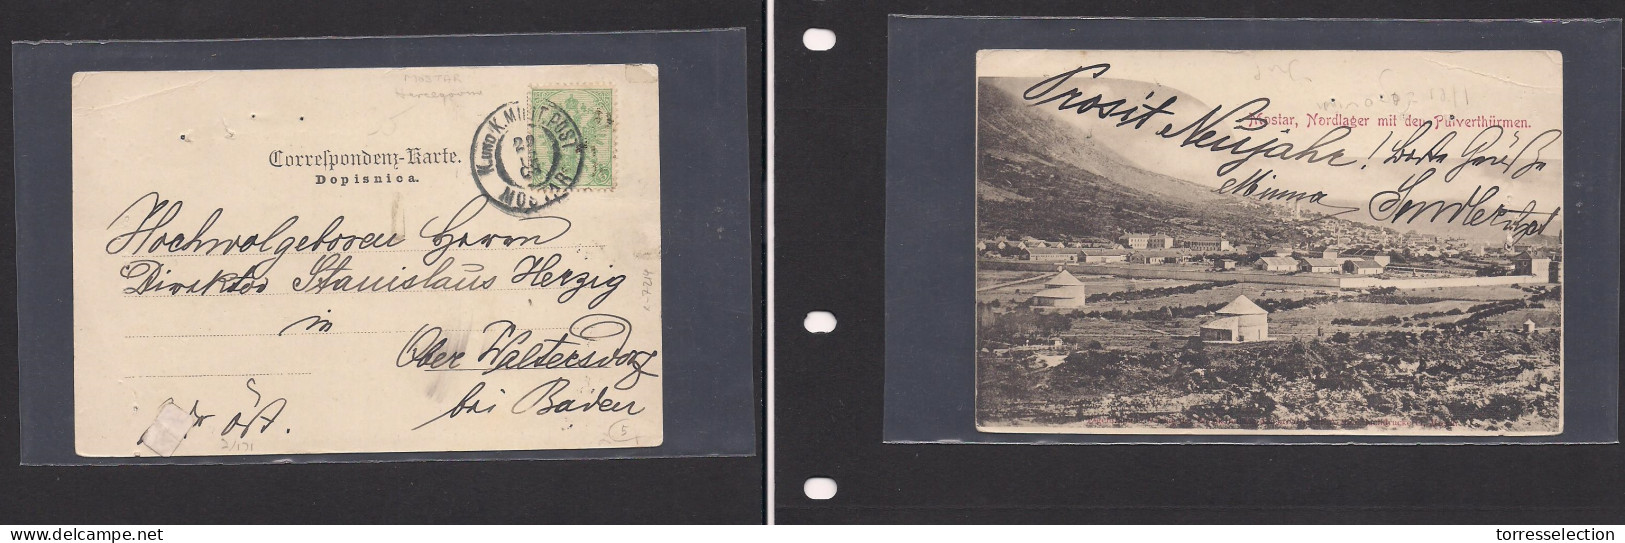 BOSNIA. Bosnia - Cover 1908 Mit Post Fkd Card Mostar To Ober Waltersdorf, Baden, Better Fine Print Stamp. Easy Deal. XSA - Bosnia Herzegovina